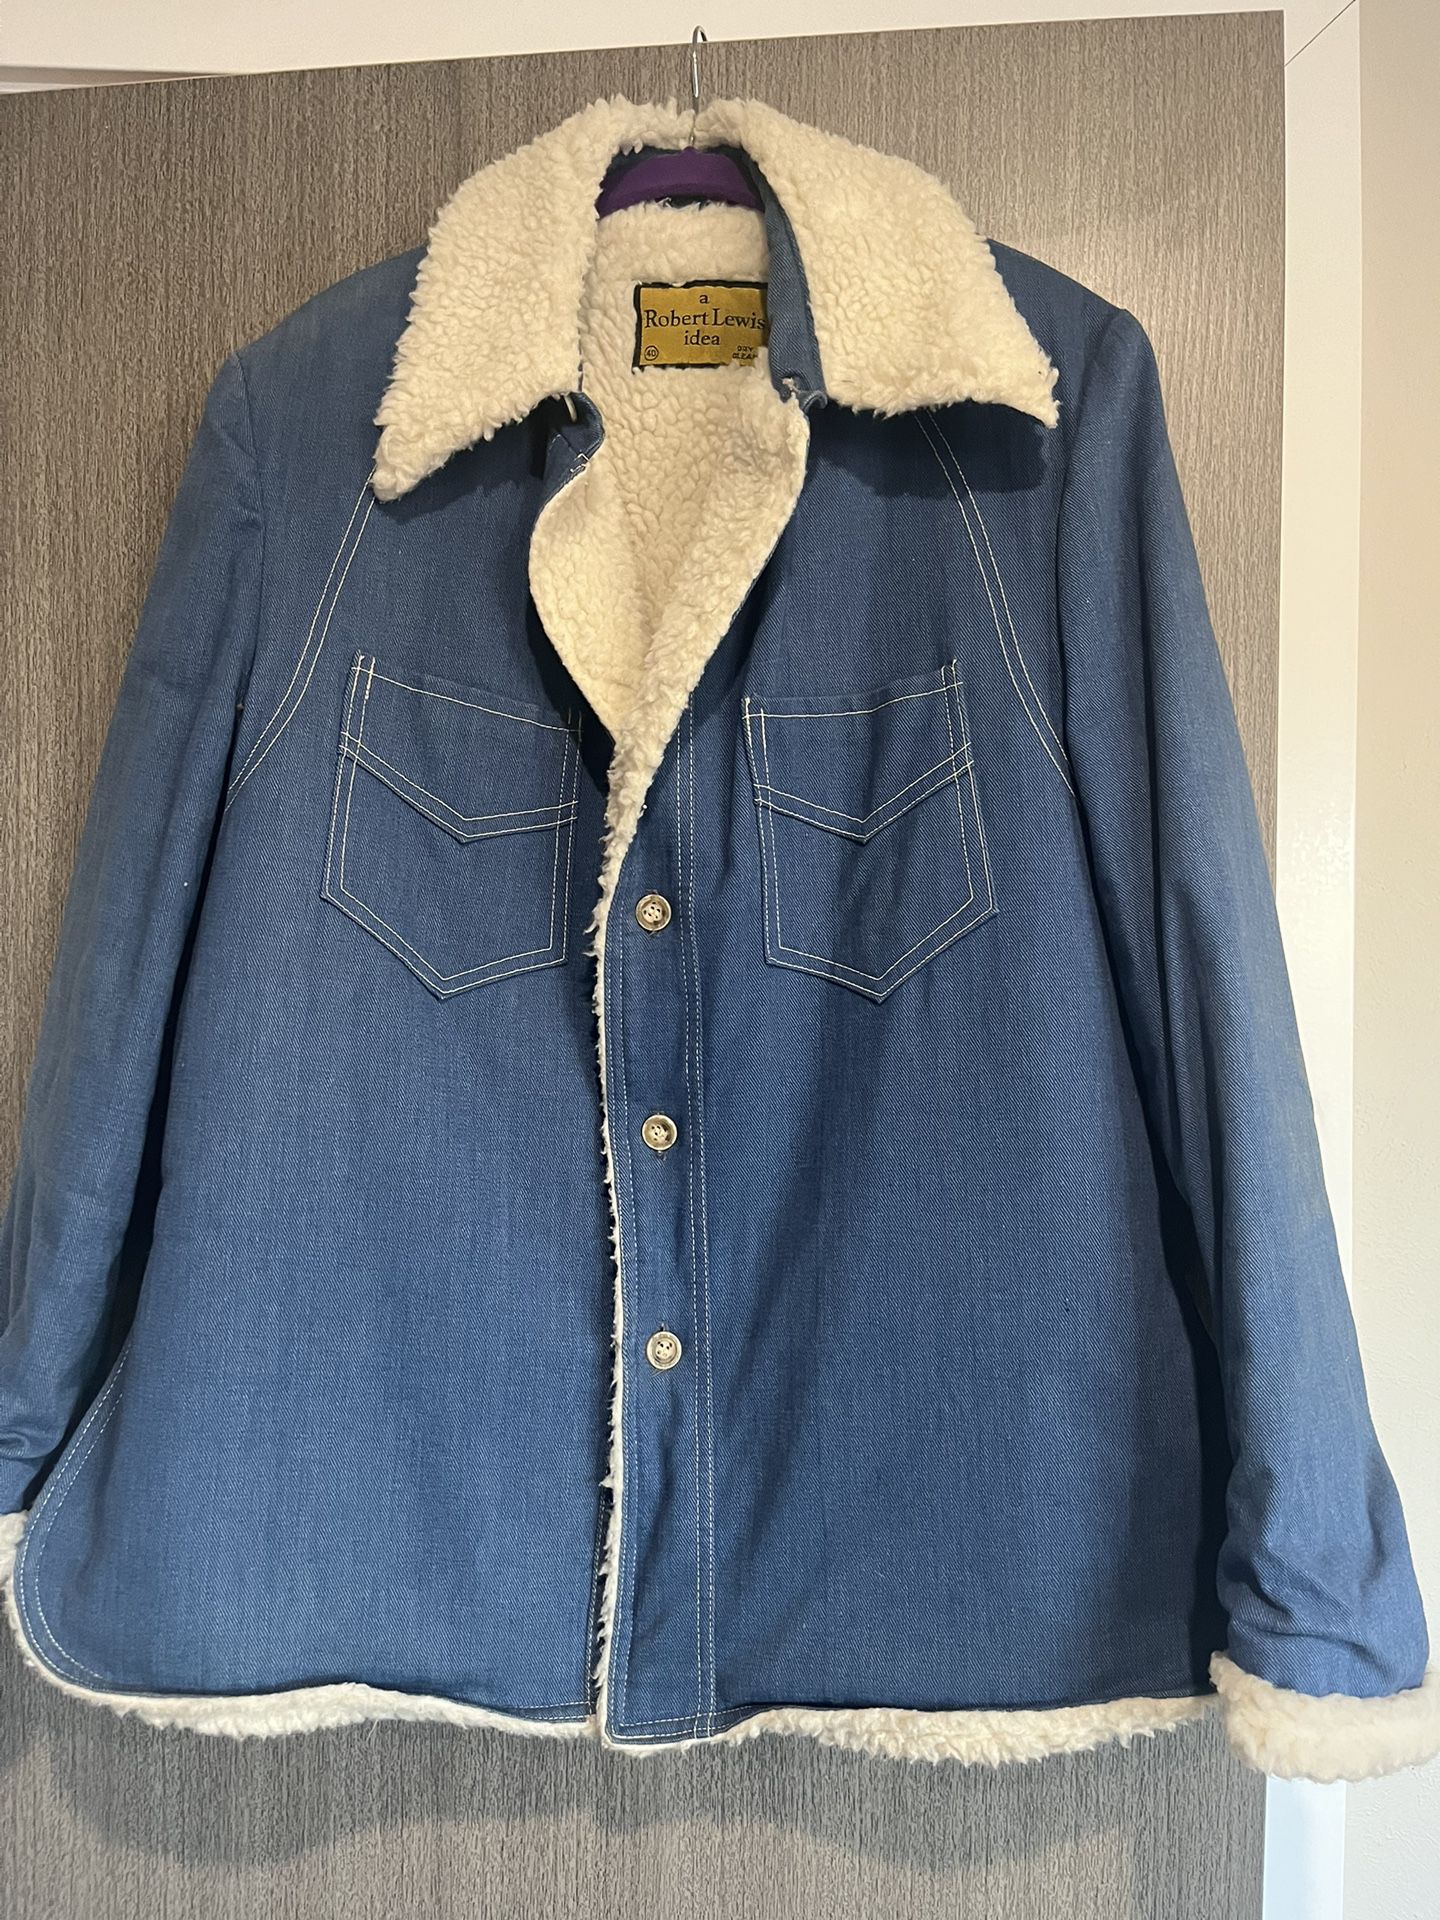 Vintage Robert Lewis Women’s Denim And Sherpa Jacket Size 40 (L)